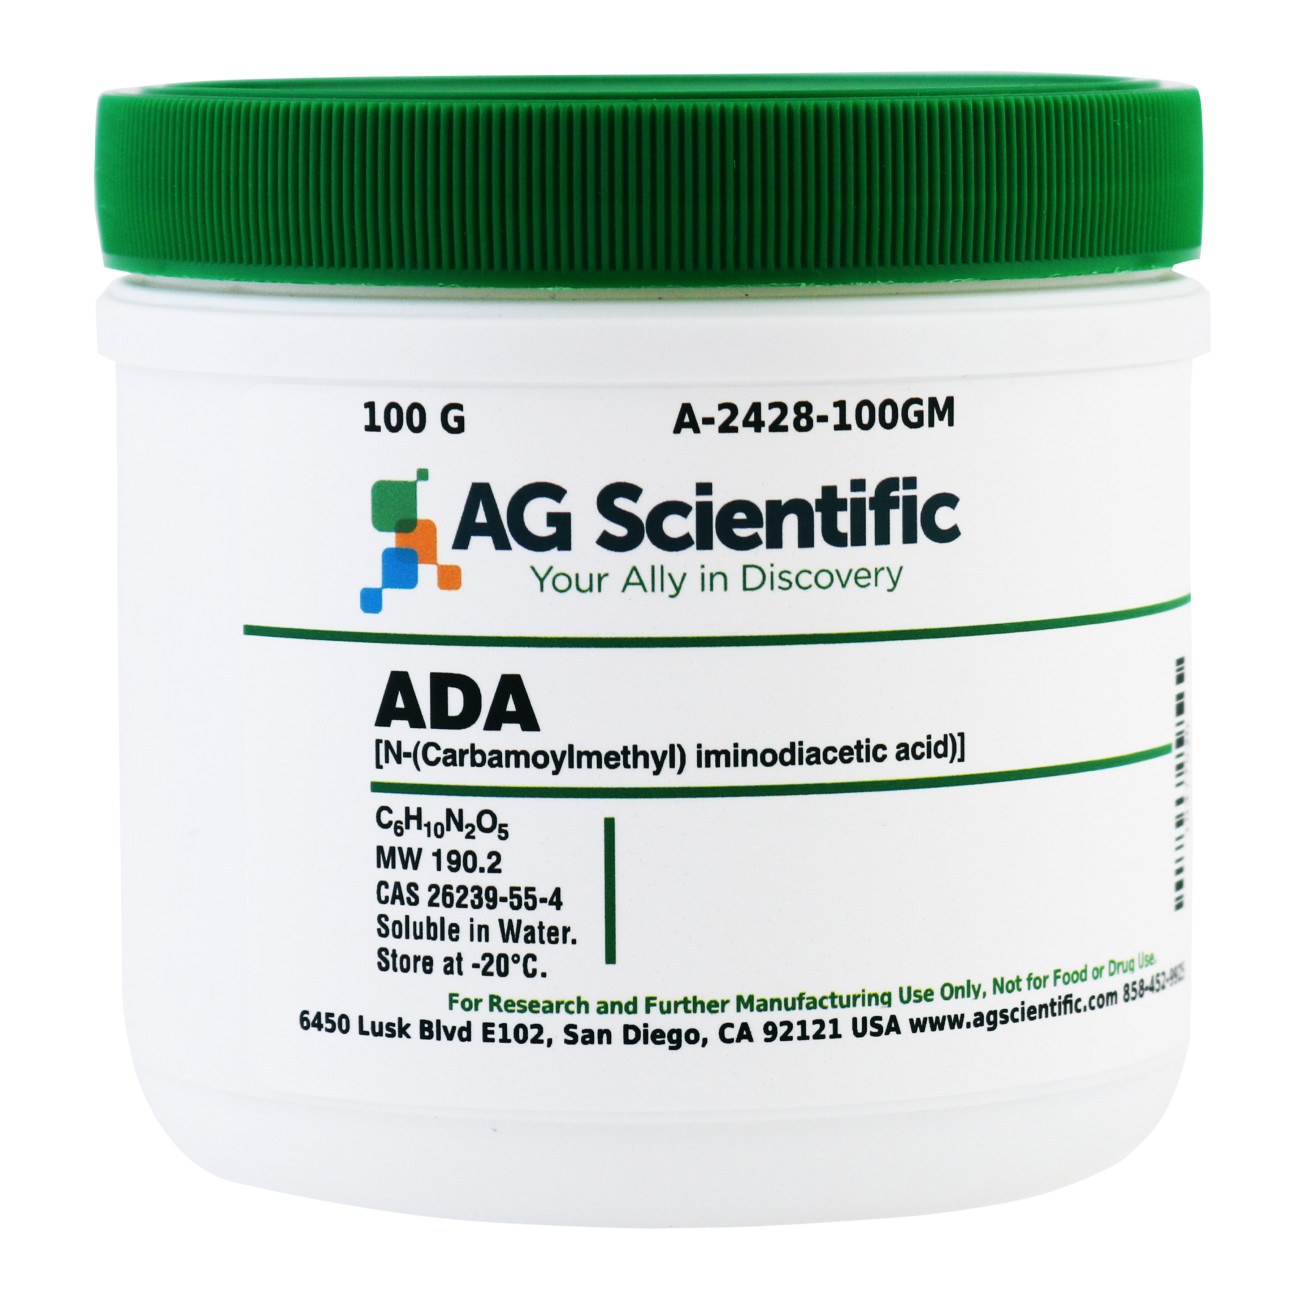 ADA [N-(Carbamoylmethyl) iminodiacetic acid], 100 G